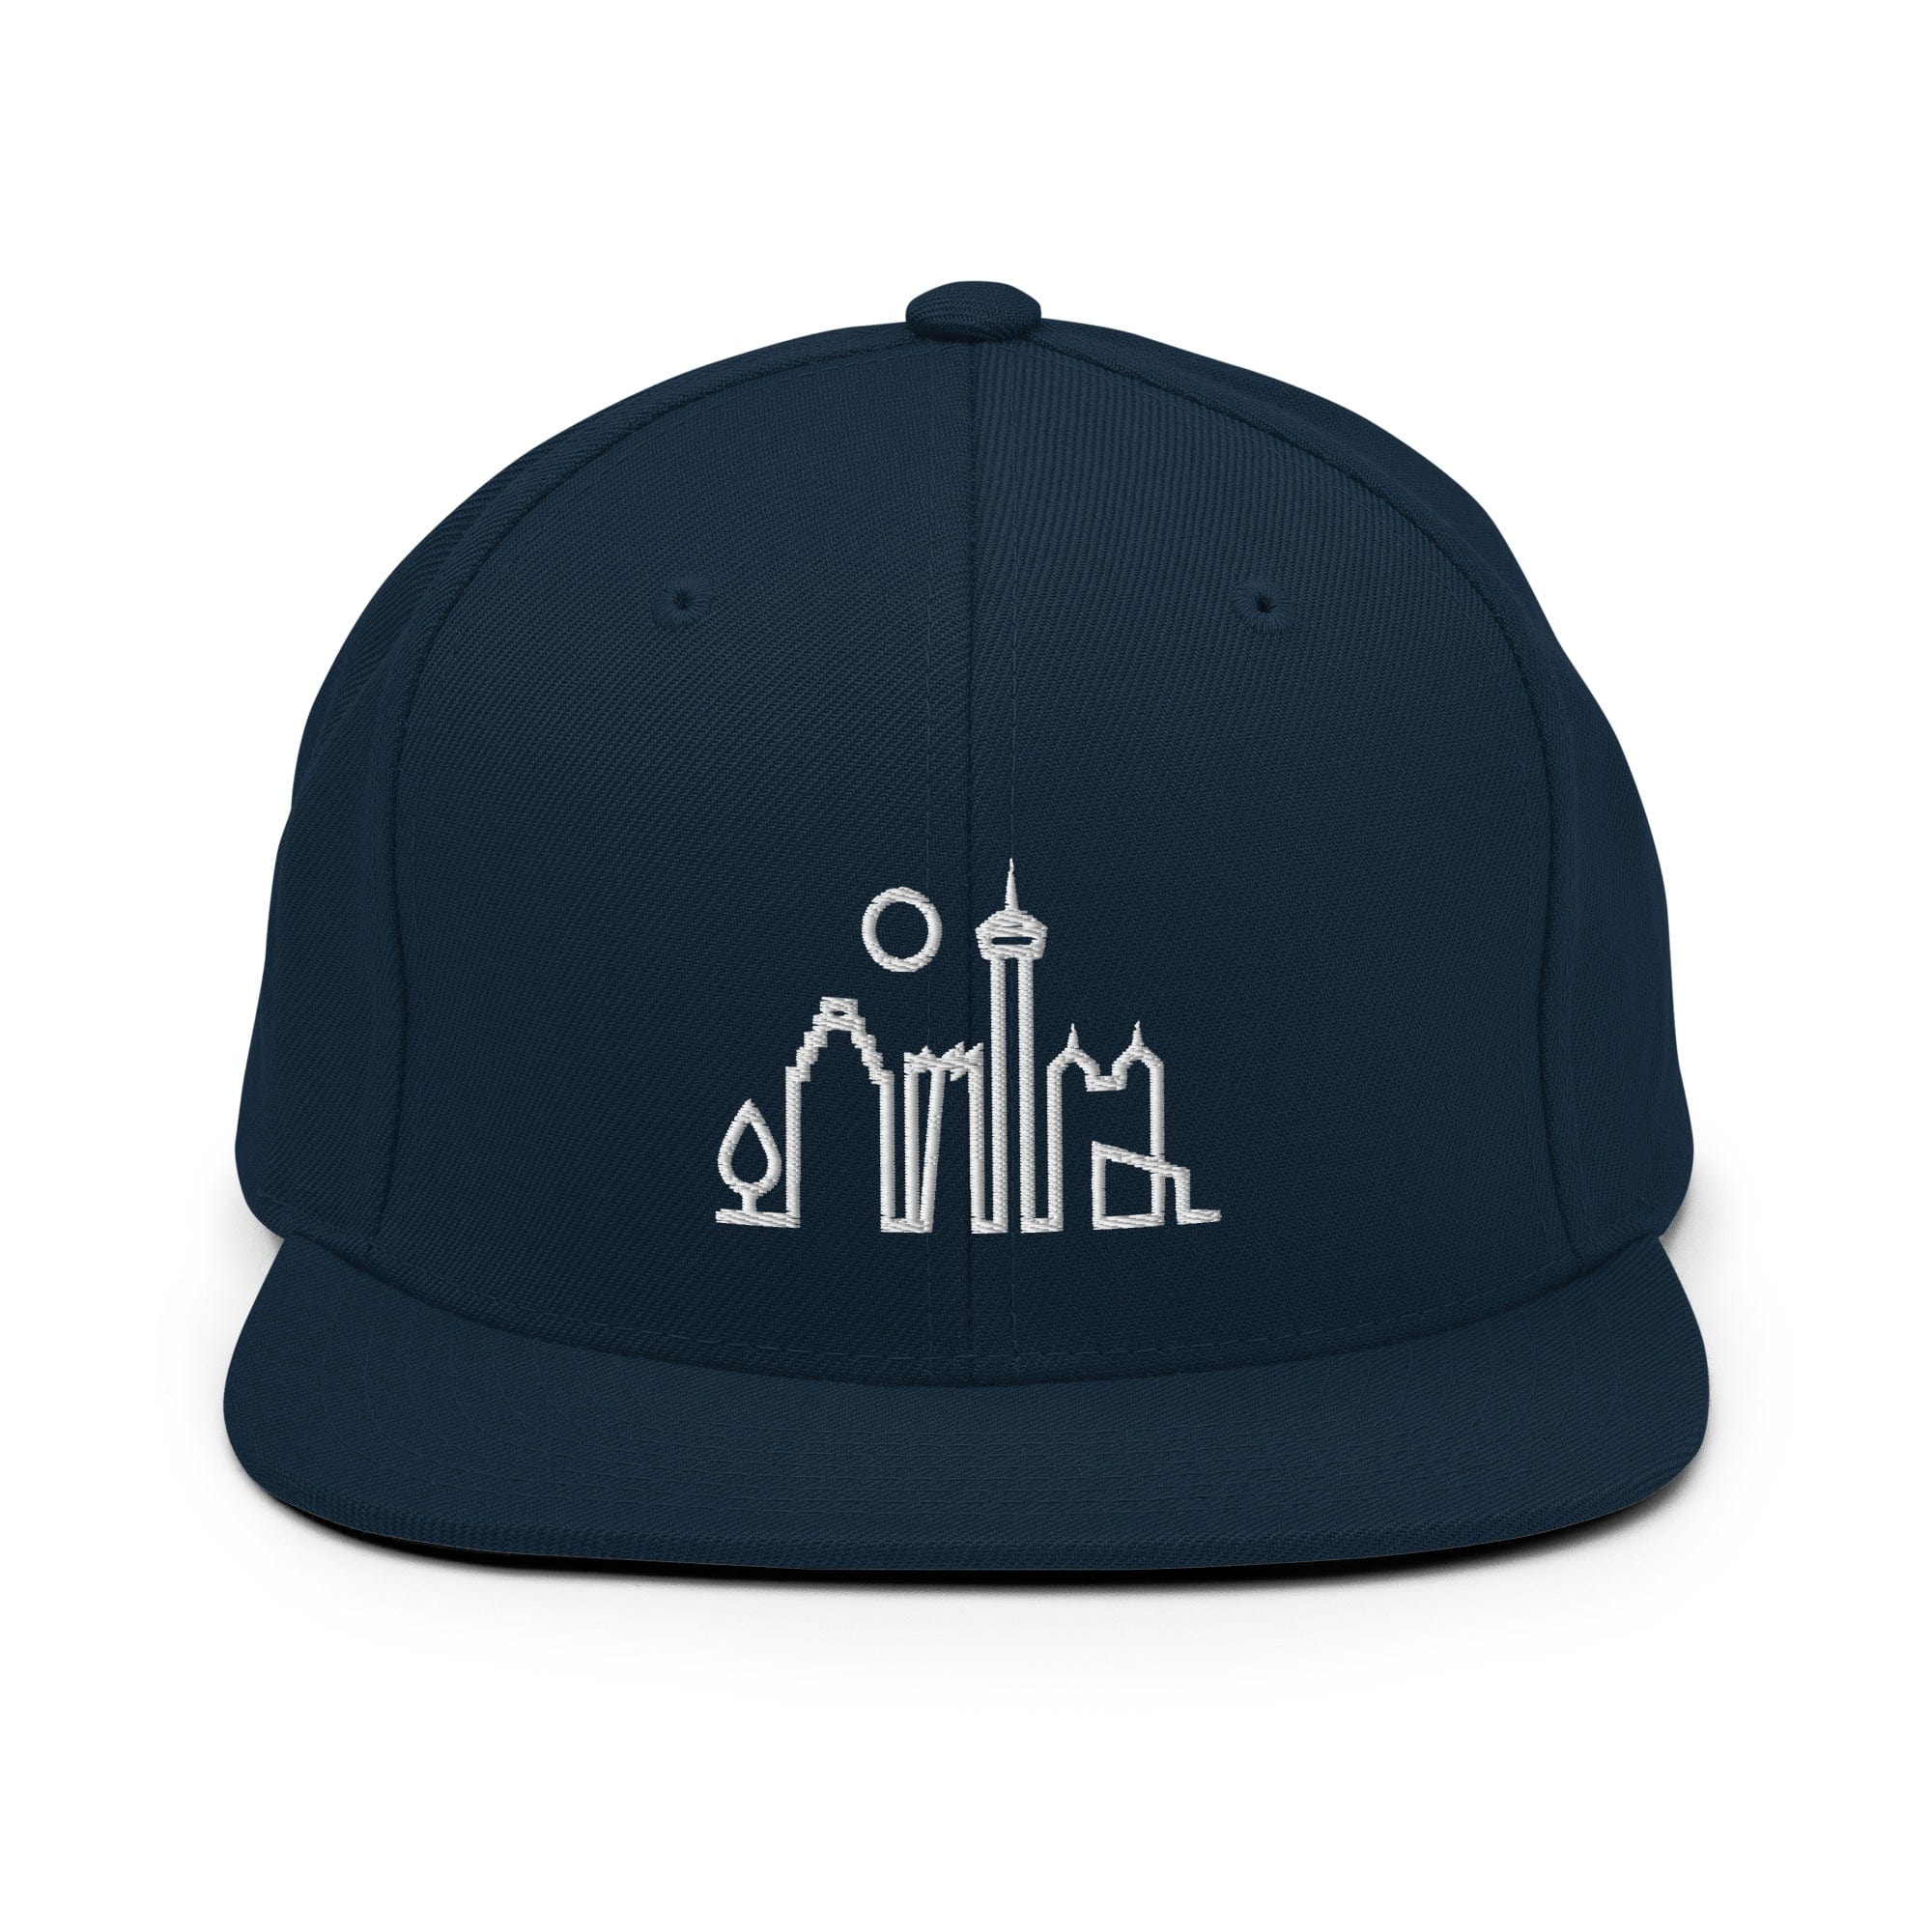 City Shirt Co San Antonio Urban Dweller Snapback Hat Dark Navy